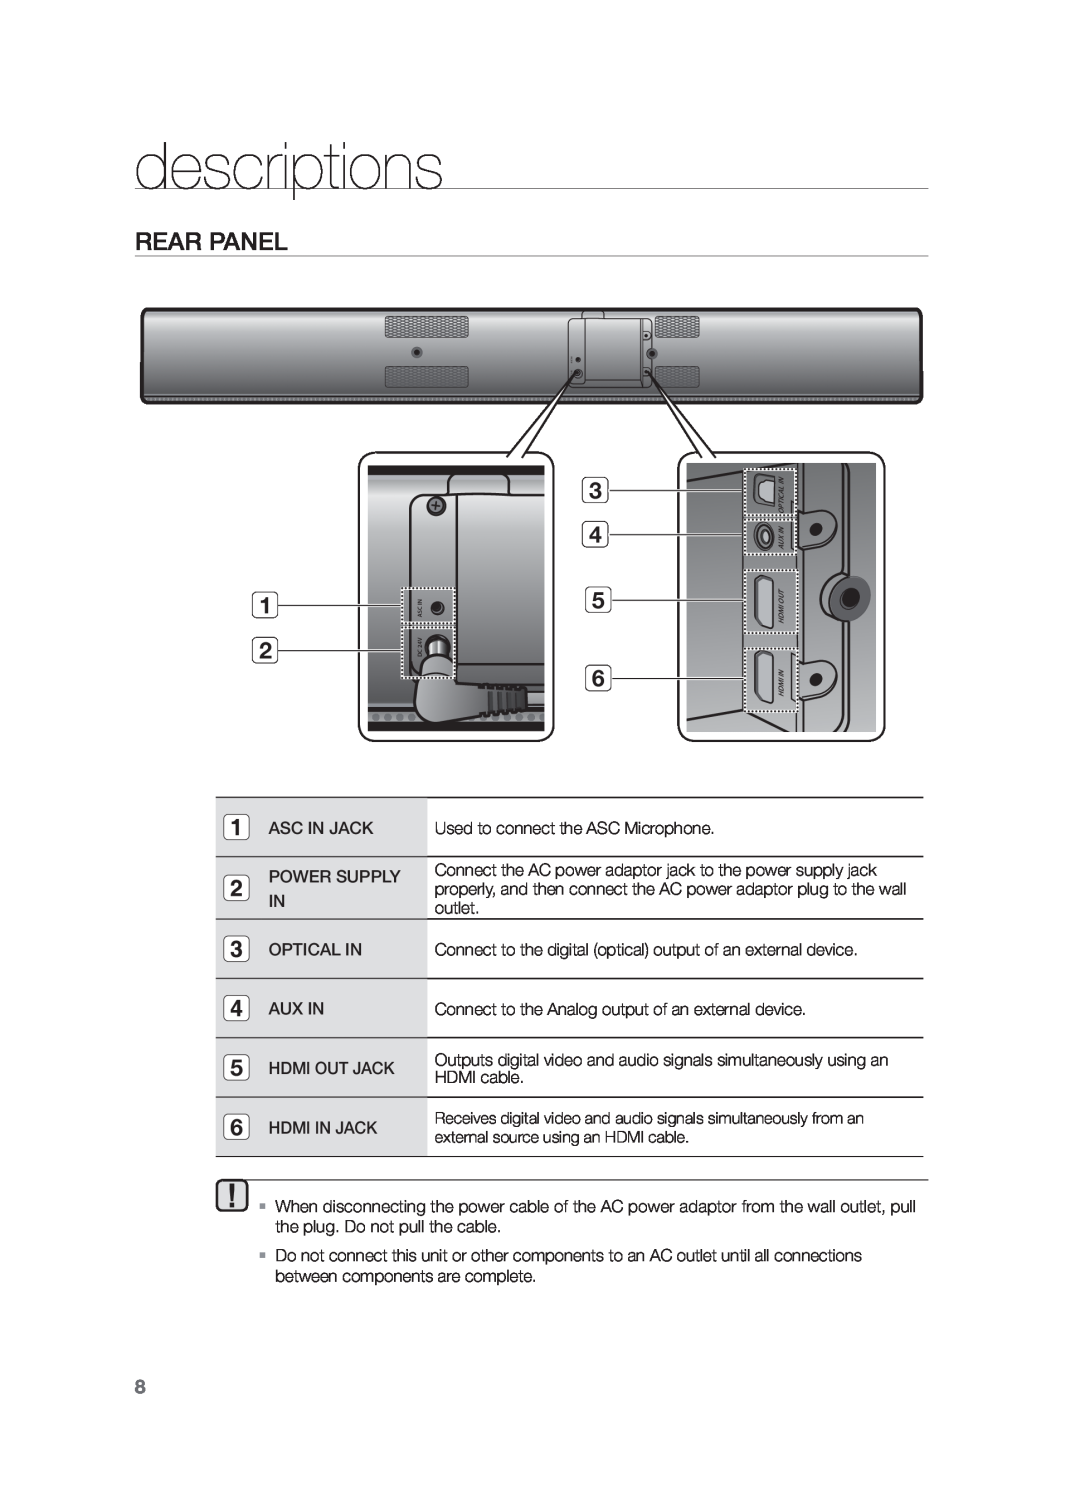 Samsung HW-F751/EN, HW-F751/XN, HW-F751/TK manual Rear Panel, descriptions 